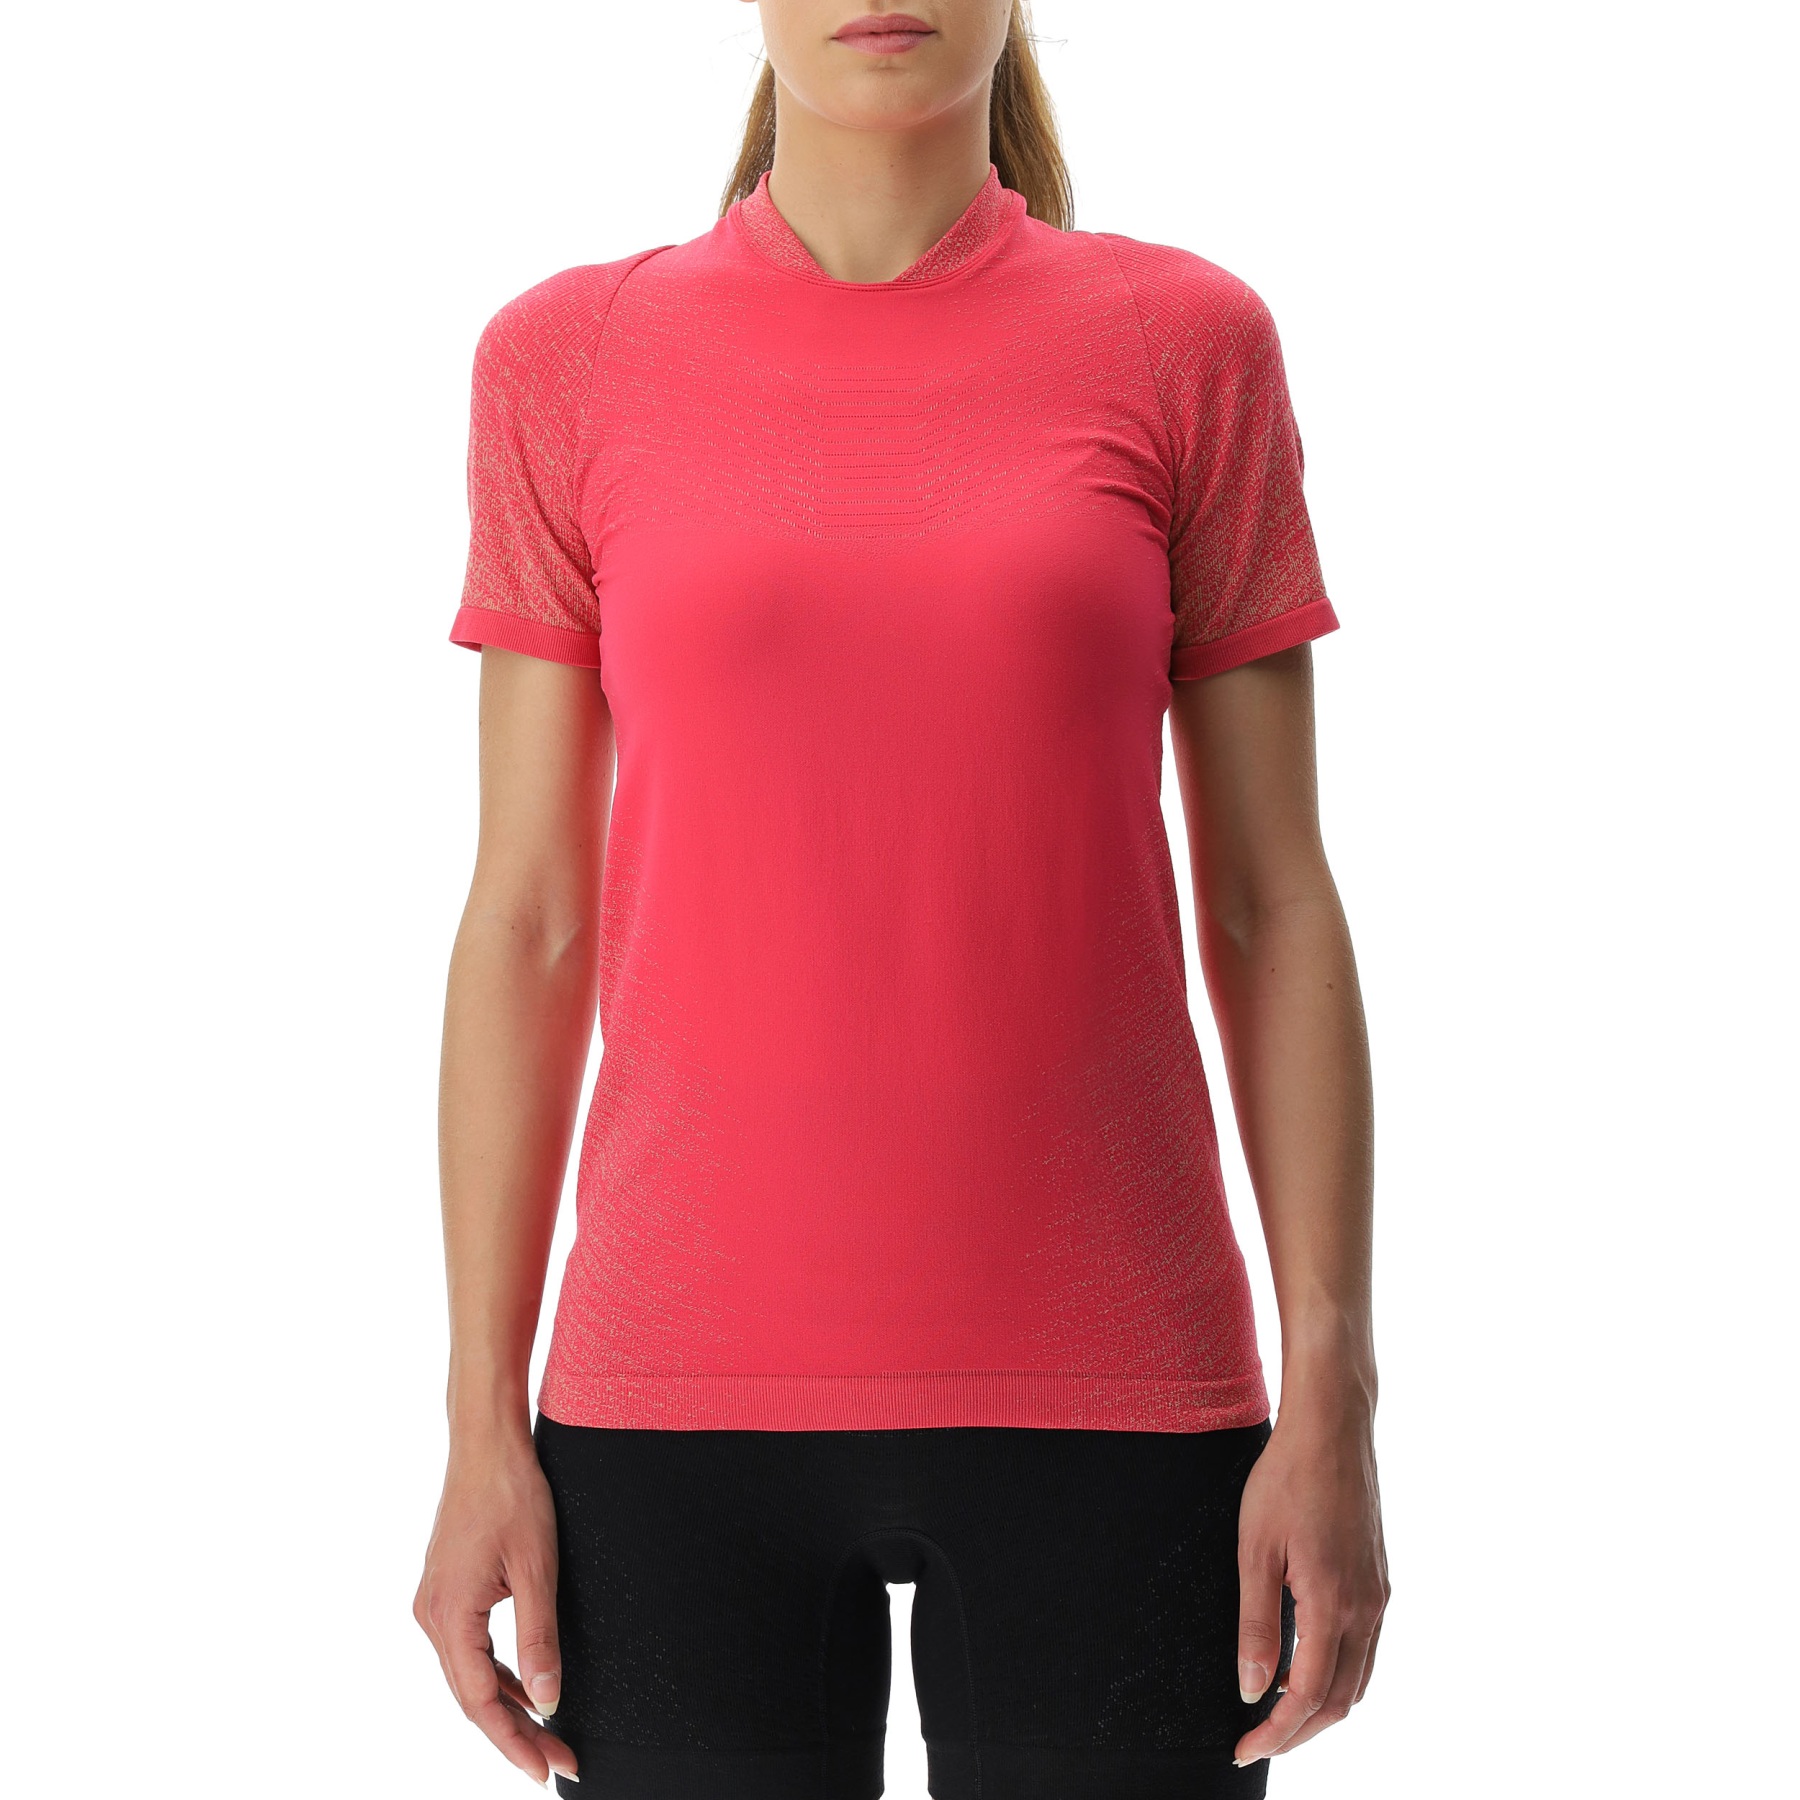 Image of UYN Running Exceleration Short Sleeve Shirt Women - Rose/Sunny